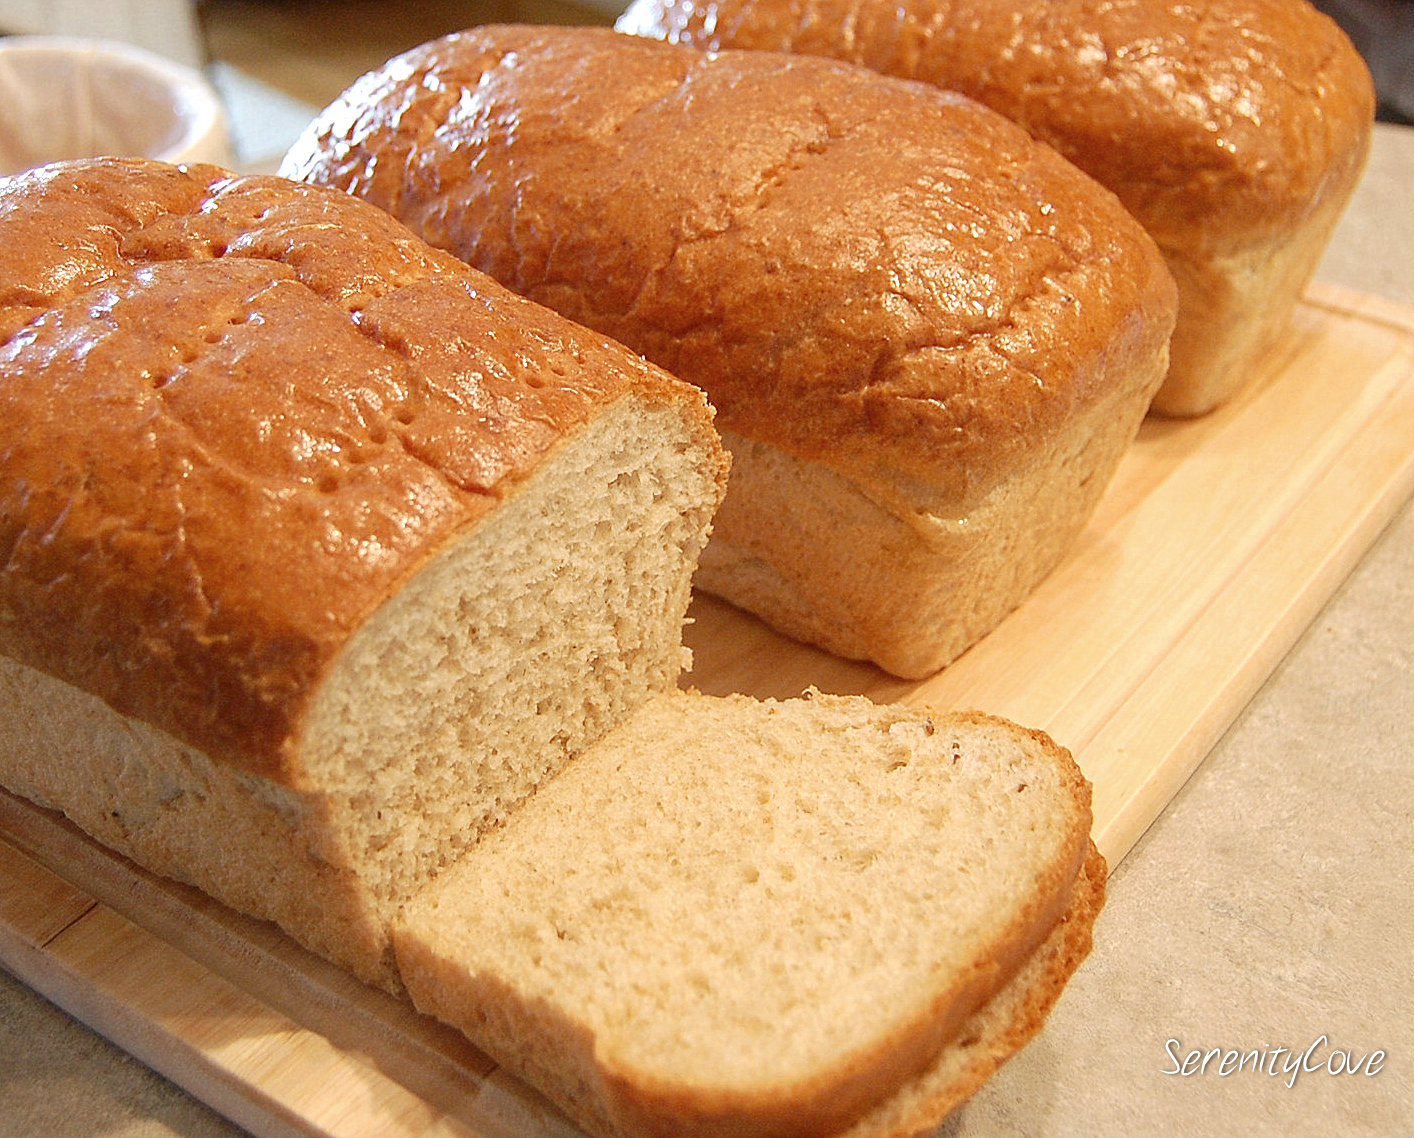 Serenity Cove: Homemade Bread
